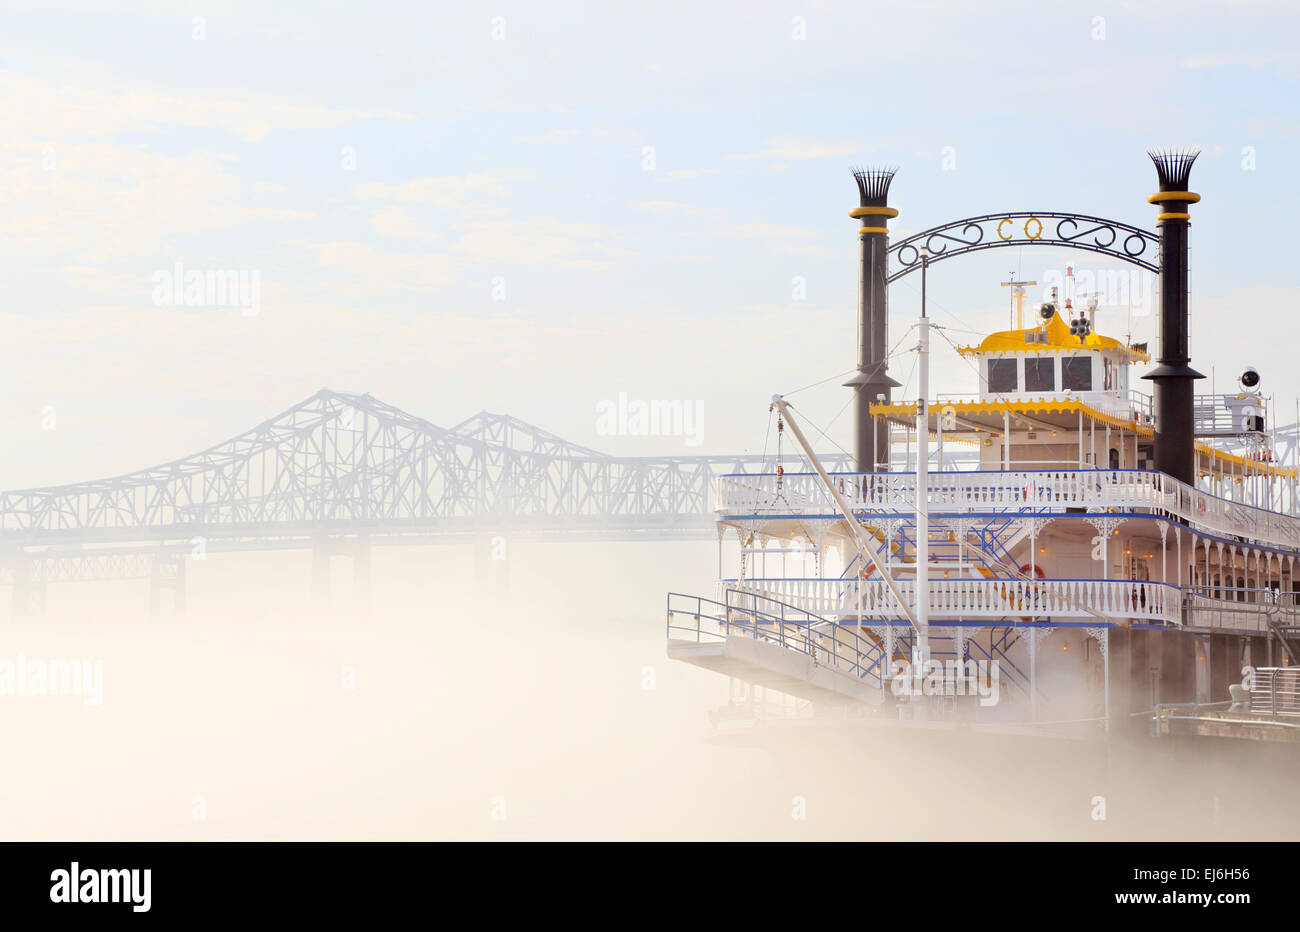 New Orleans, Louisiana. Creole Queen Cruise Ship an einem nebligen Mississippi River mit Crescent City Connection Bridge. Stockfoto